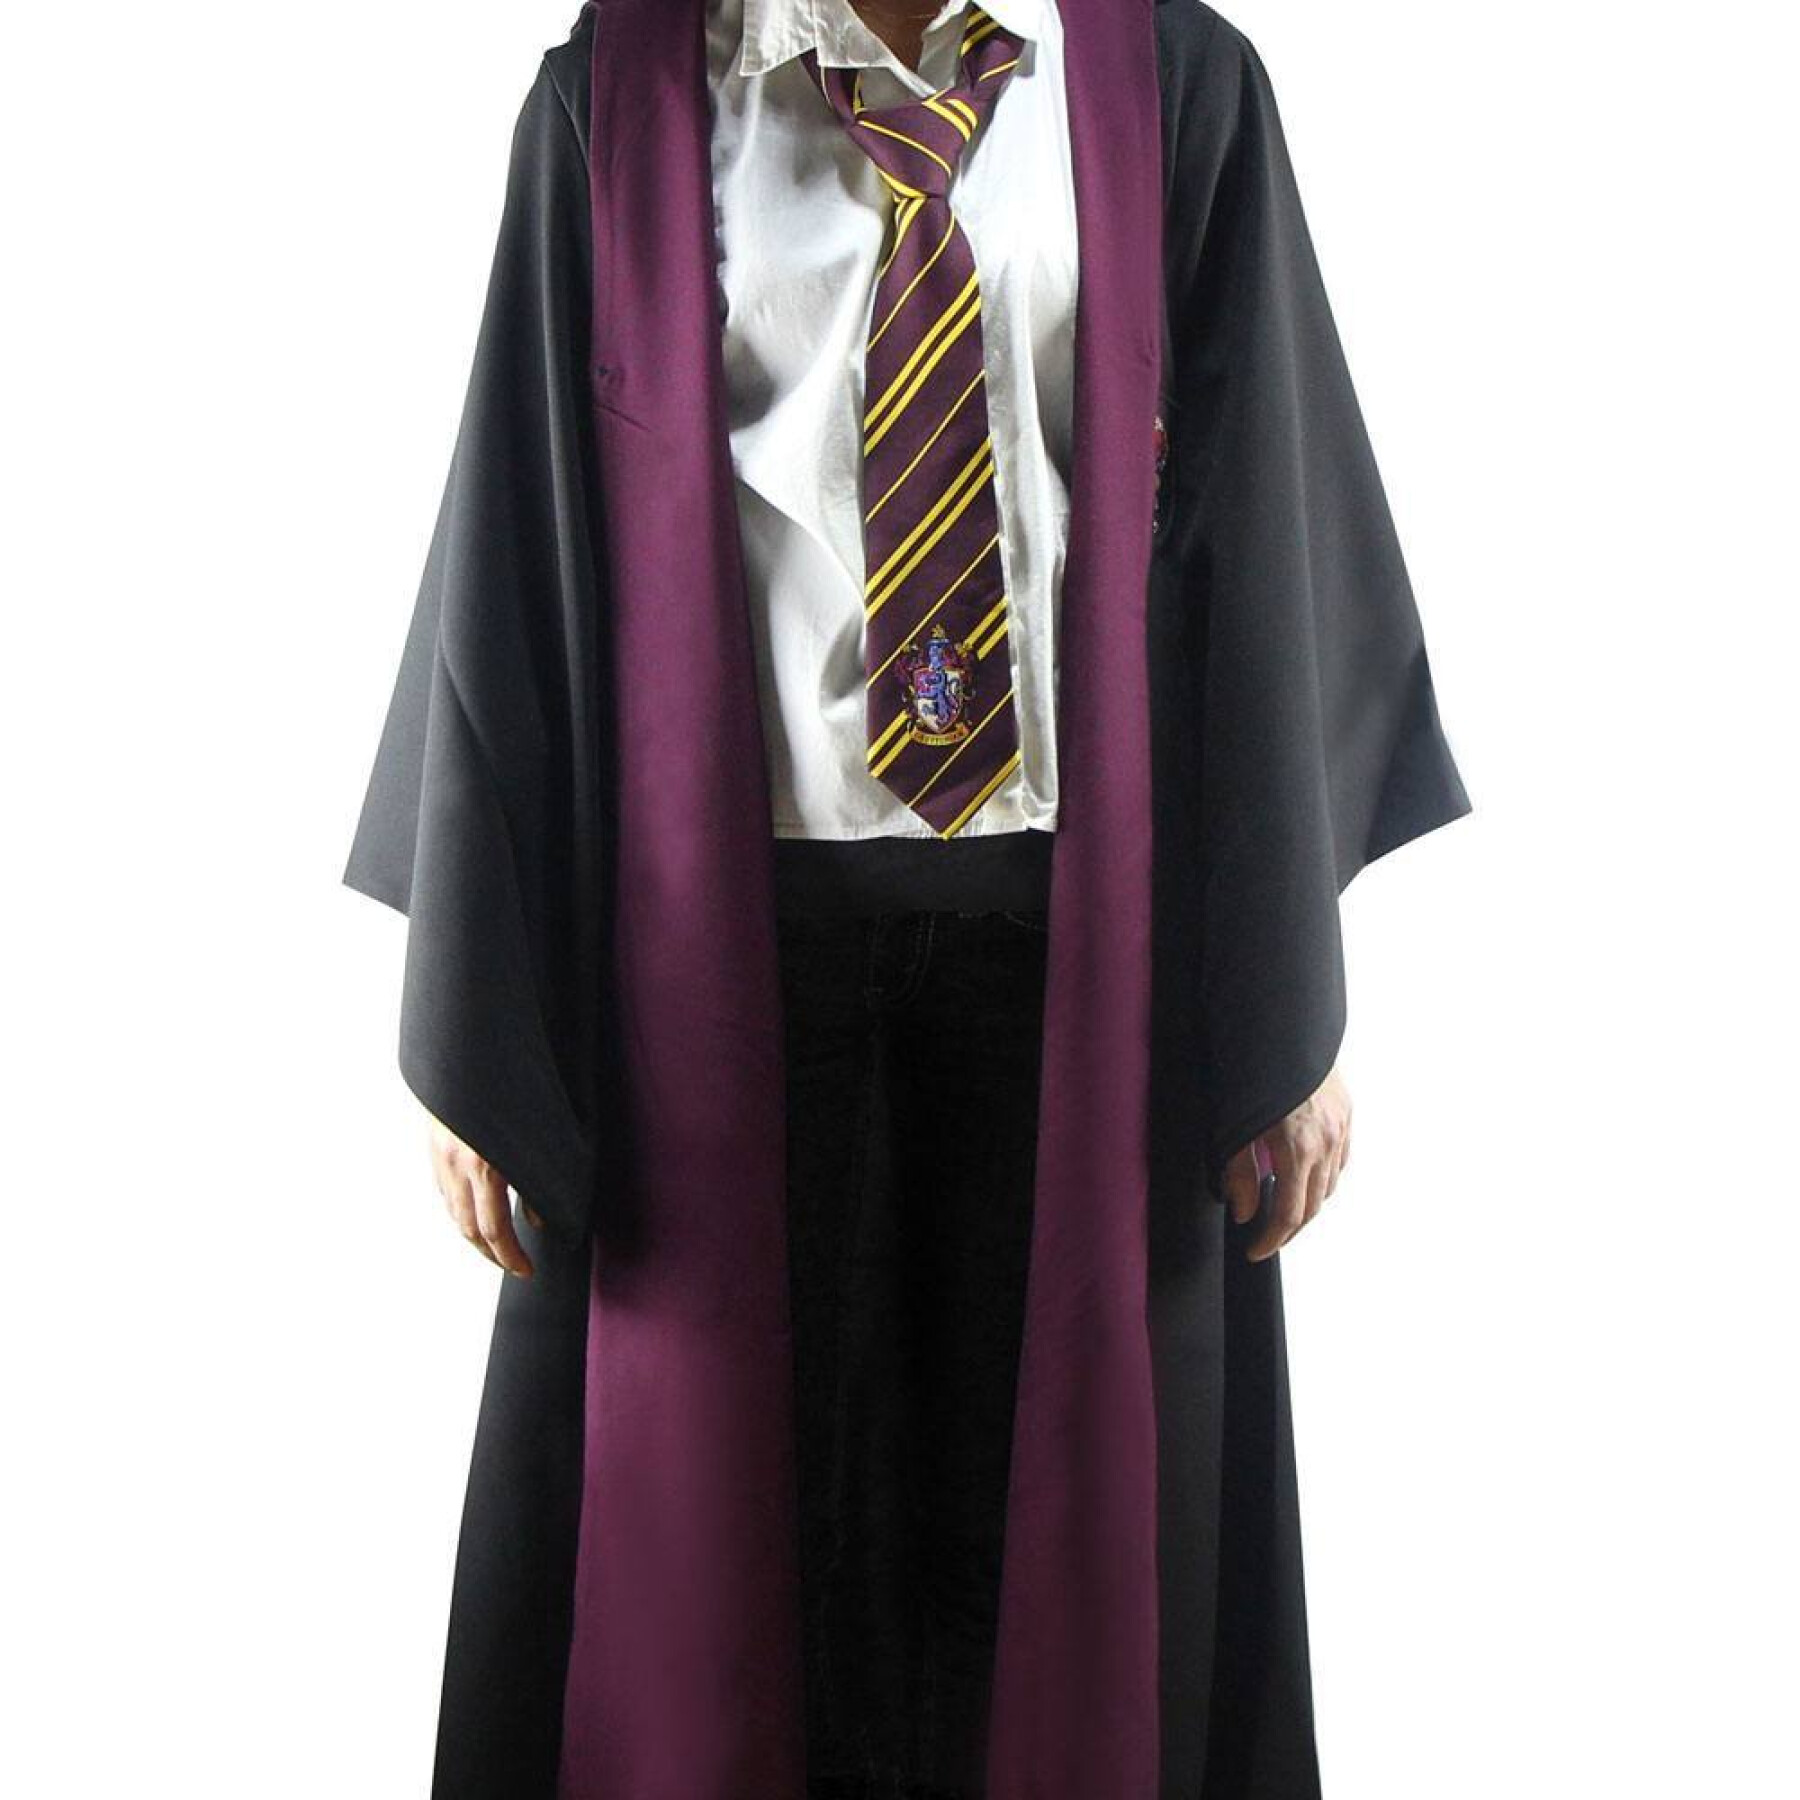 Déguisement robe de sorcier - Gryffindor Cinereplicas Harry Potter